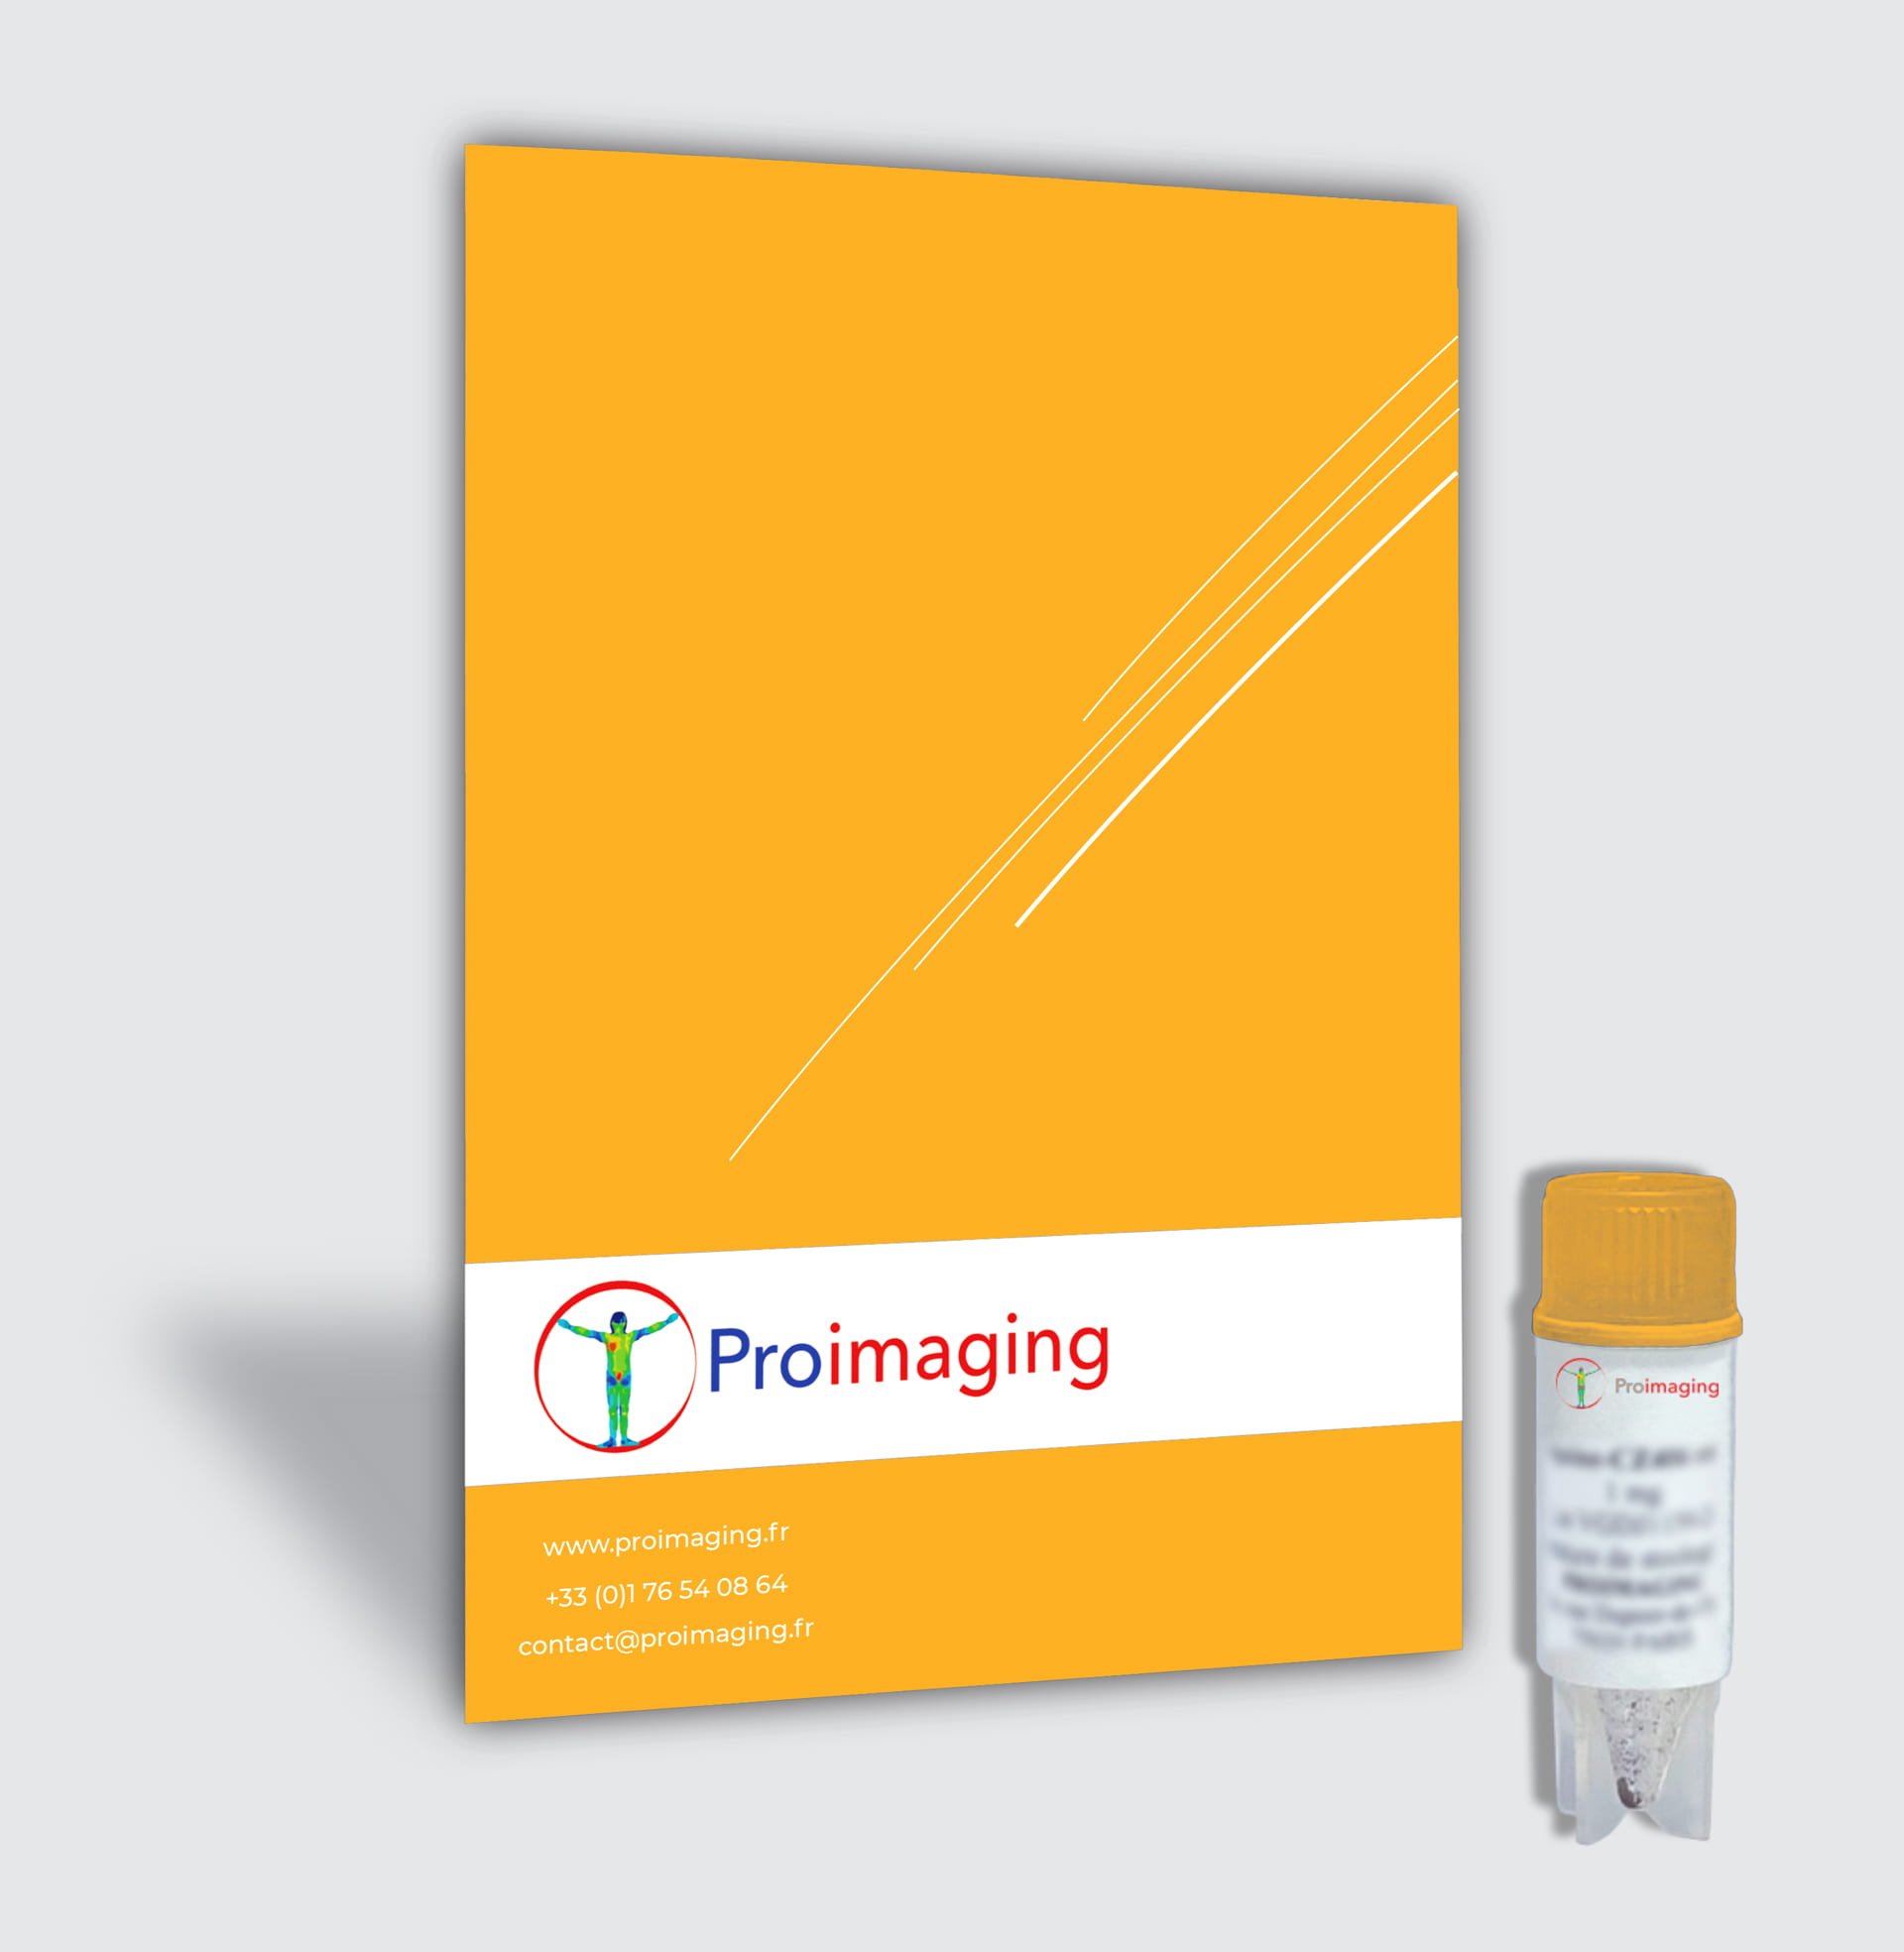 Proimaging CJ215 cancer tumor labeling